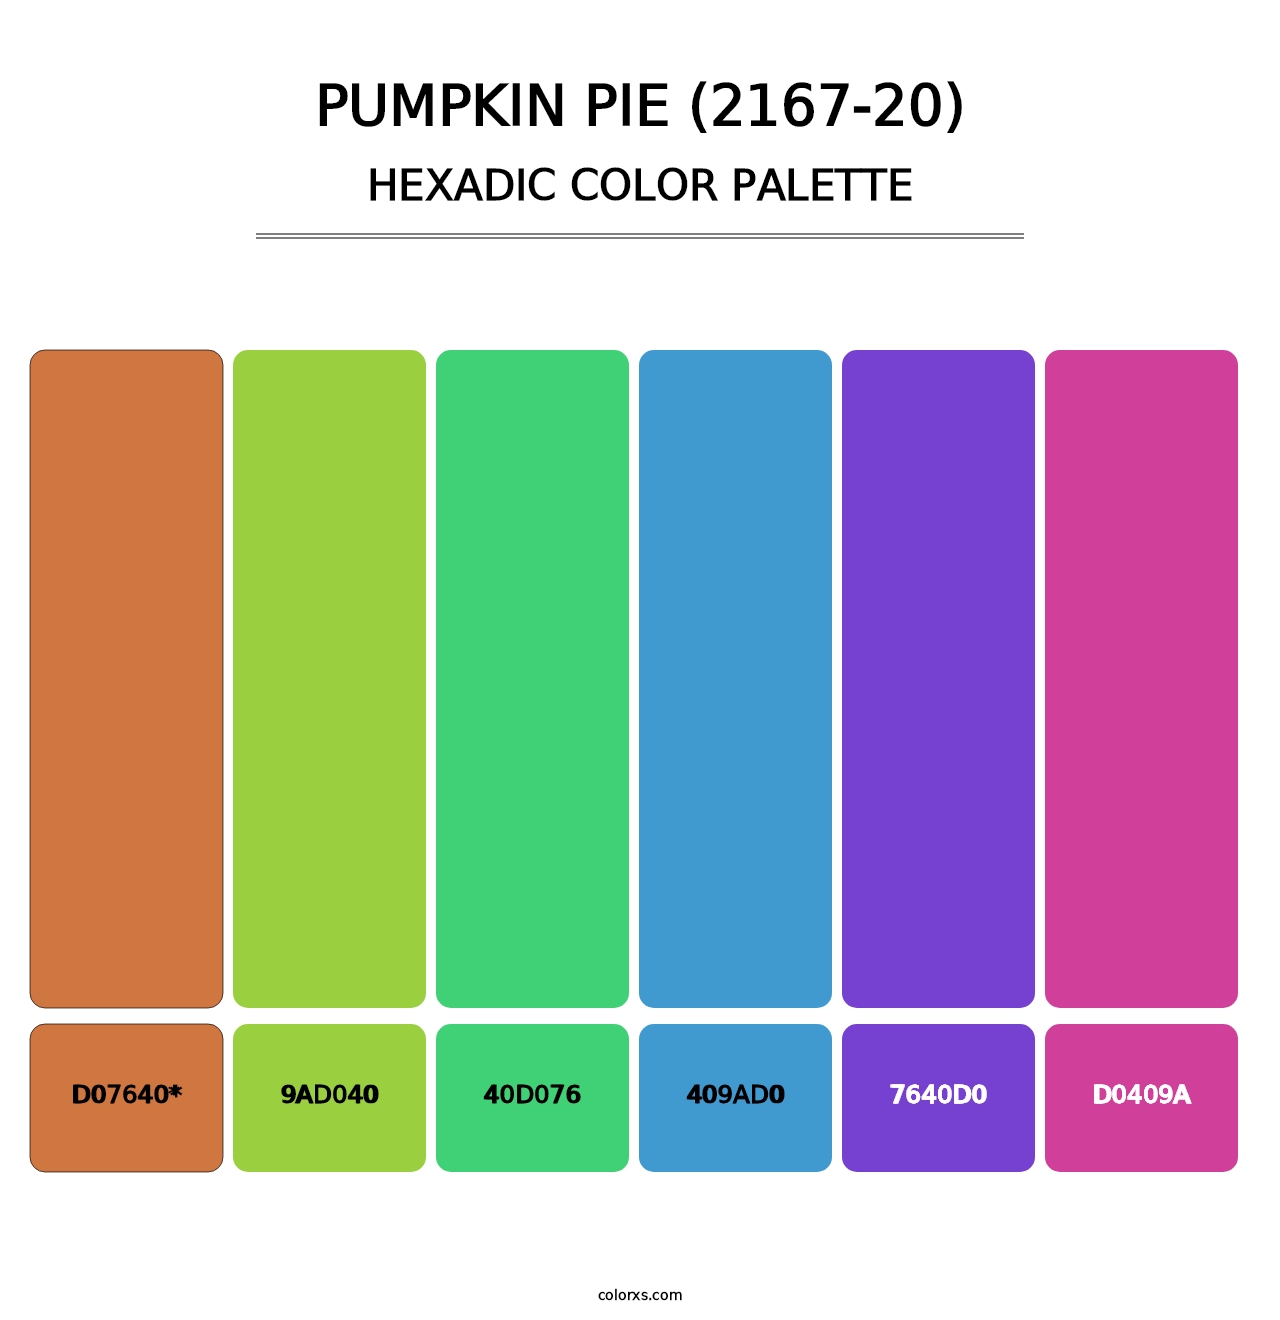 Pumpkin Pie (2167-20) - Hexadic Color Palette